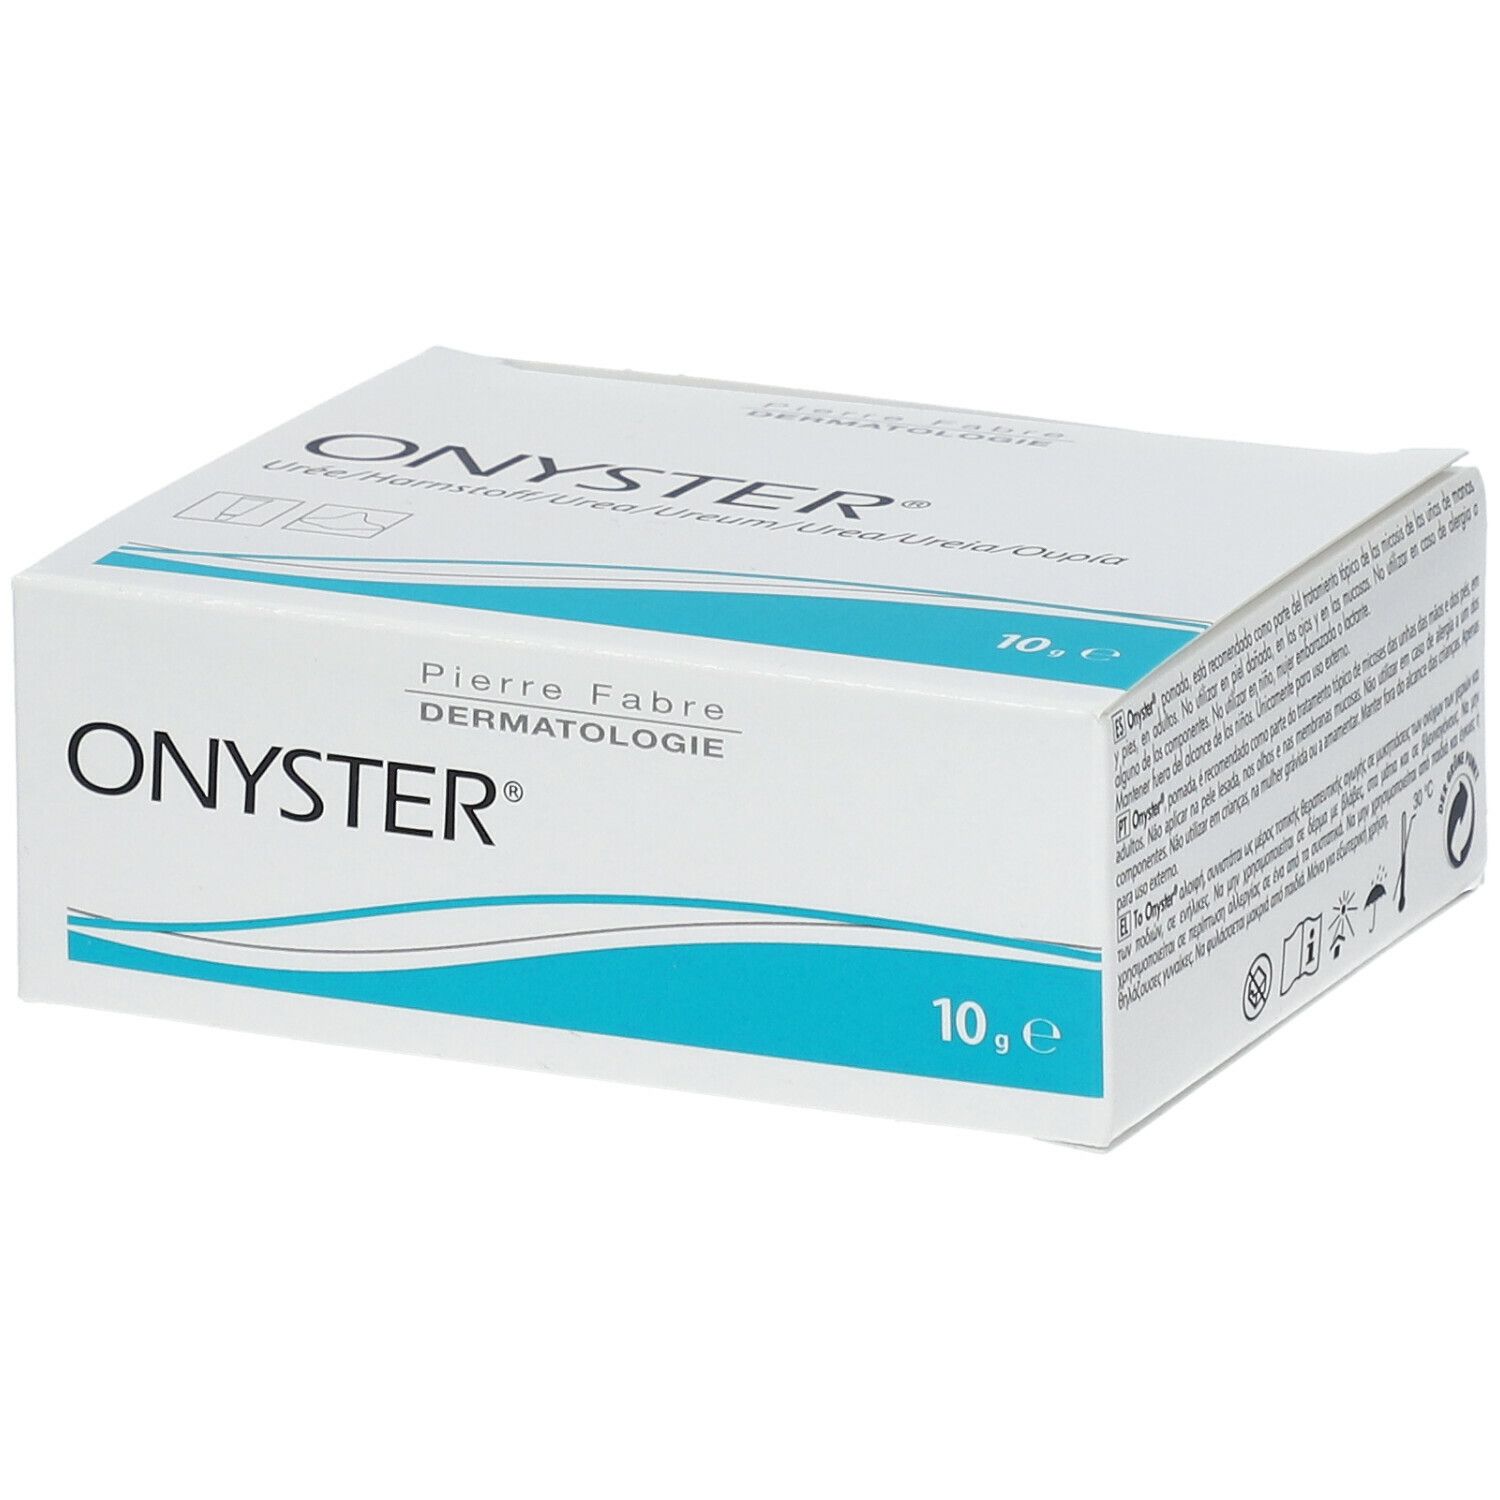 Onyster® Urea